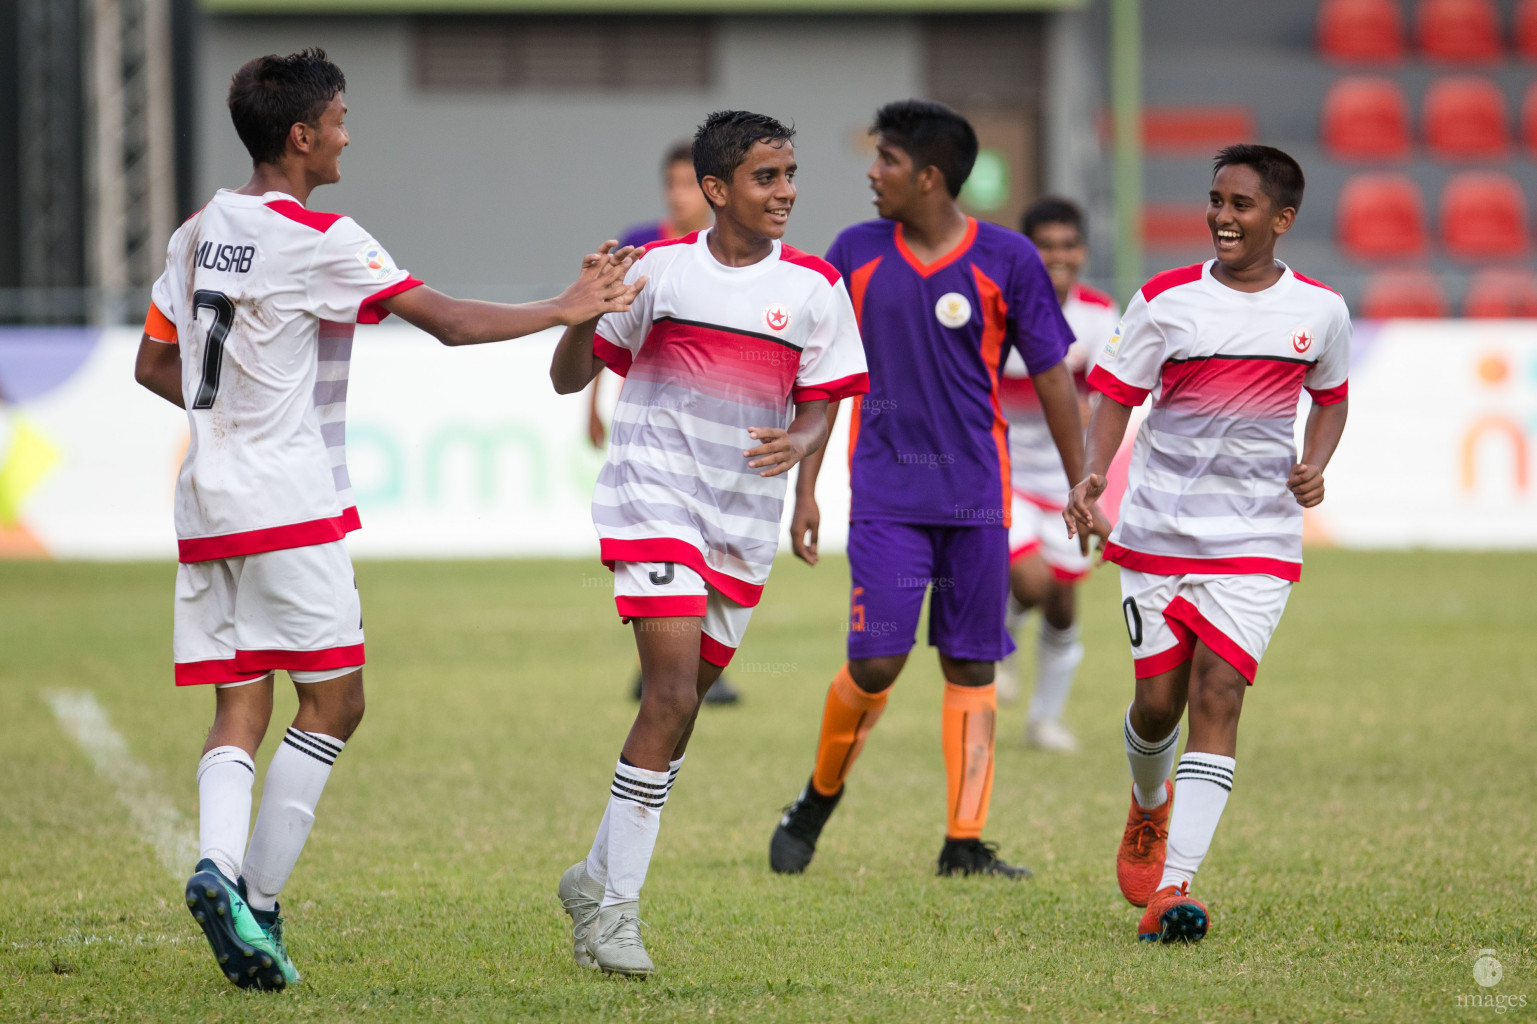 Ghiyasuddin School vs Iskandhar School in Mamen Inter-School Football Tournament 2019 (U15) on 5th March 2019, in Male' Maldives (Images.mv Photo: Suadh Abdul Sattar)